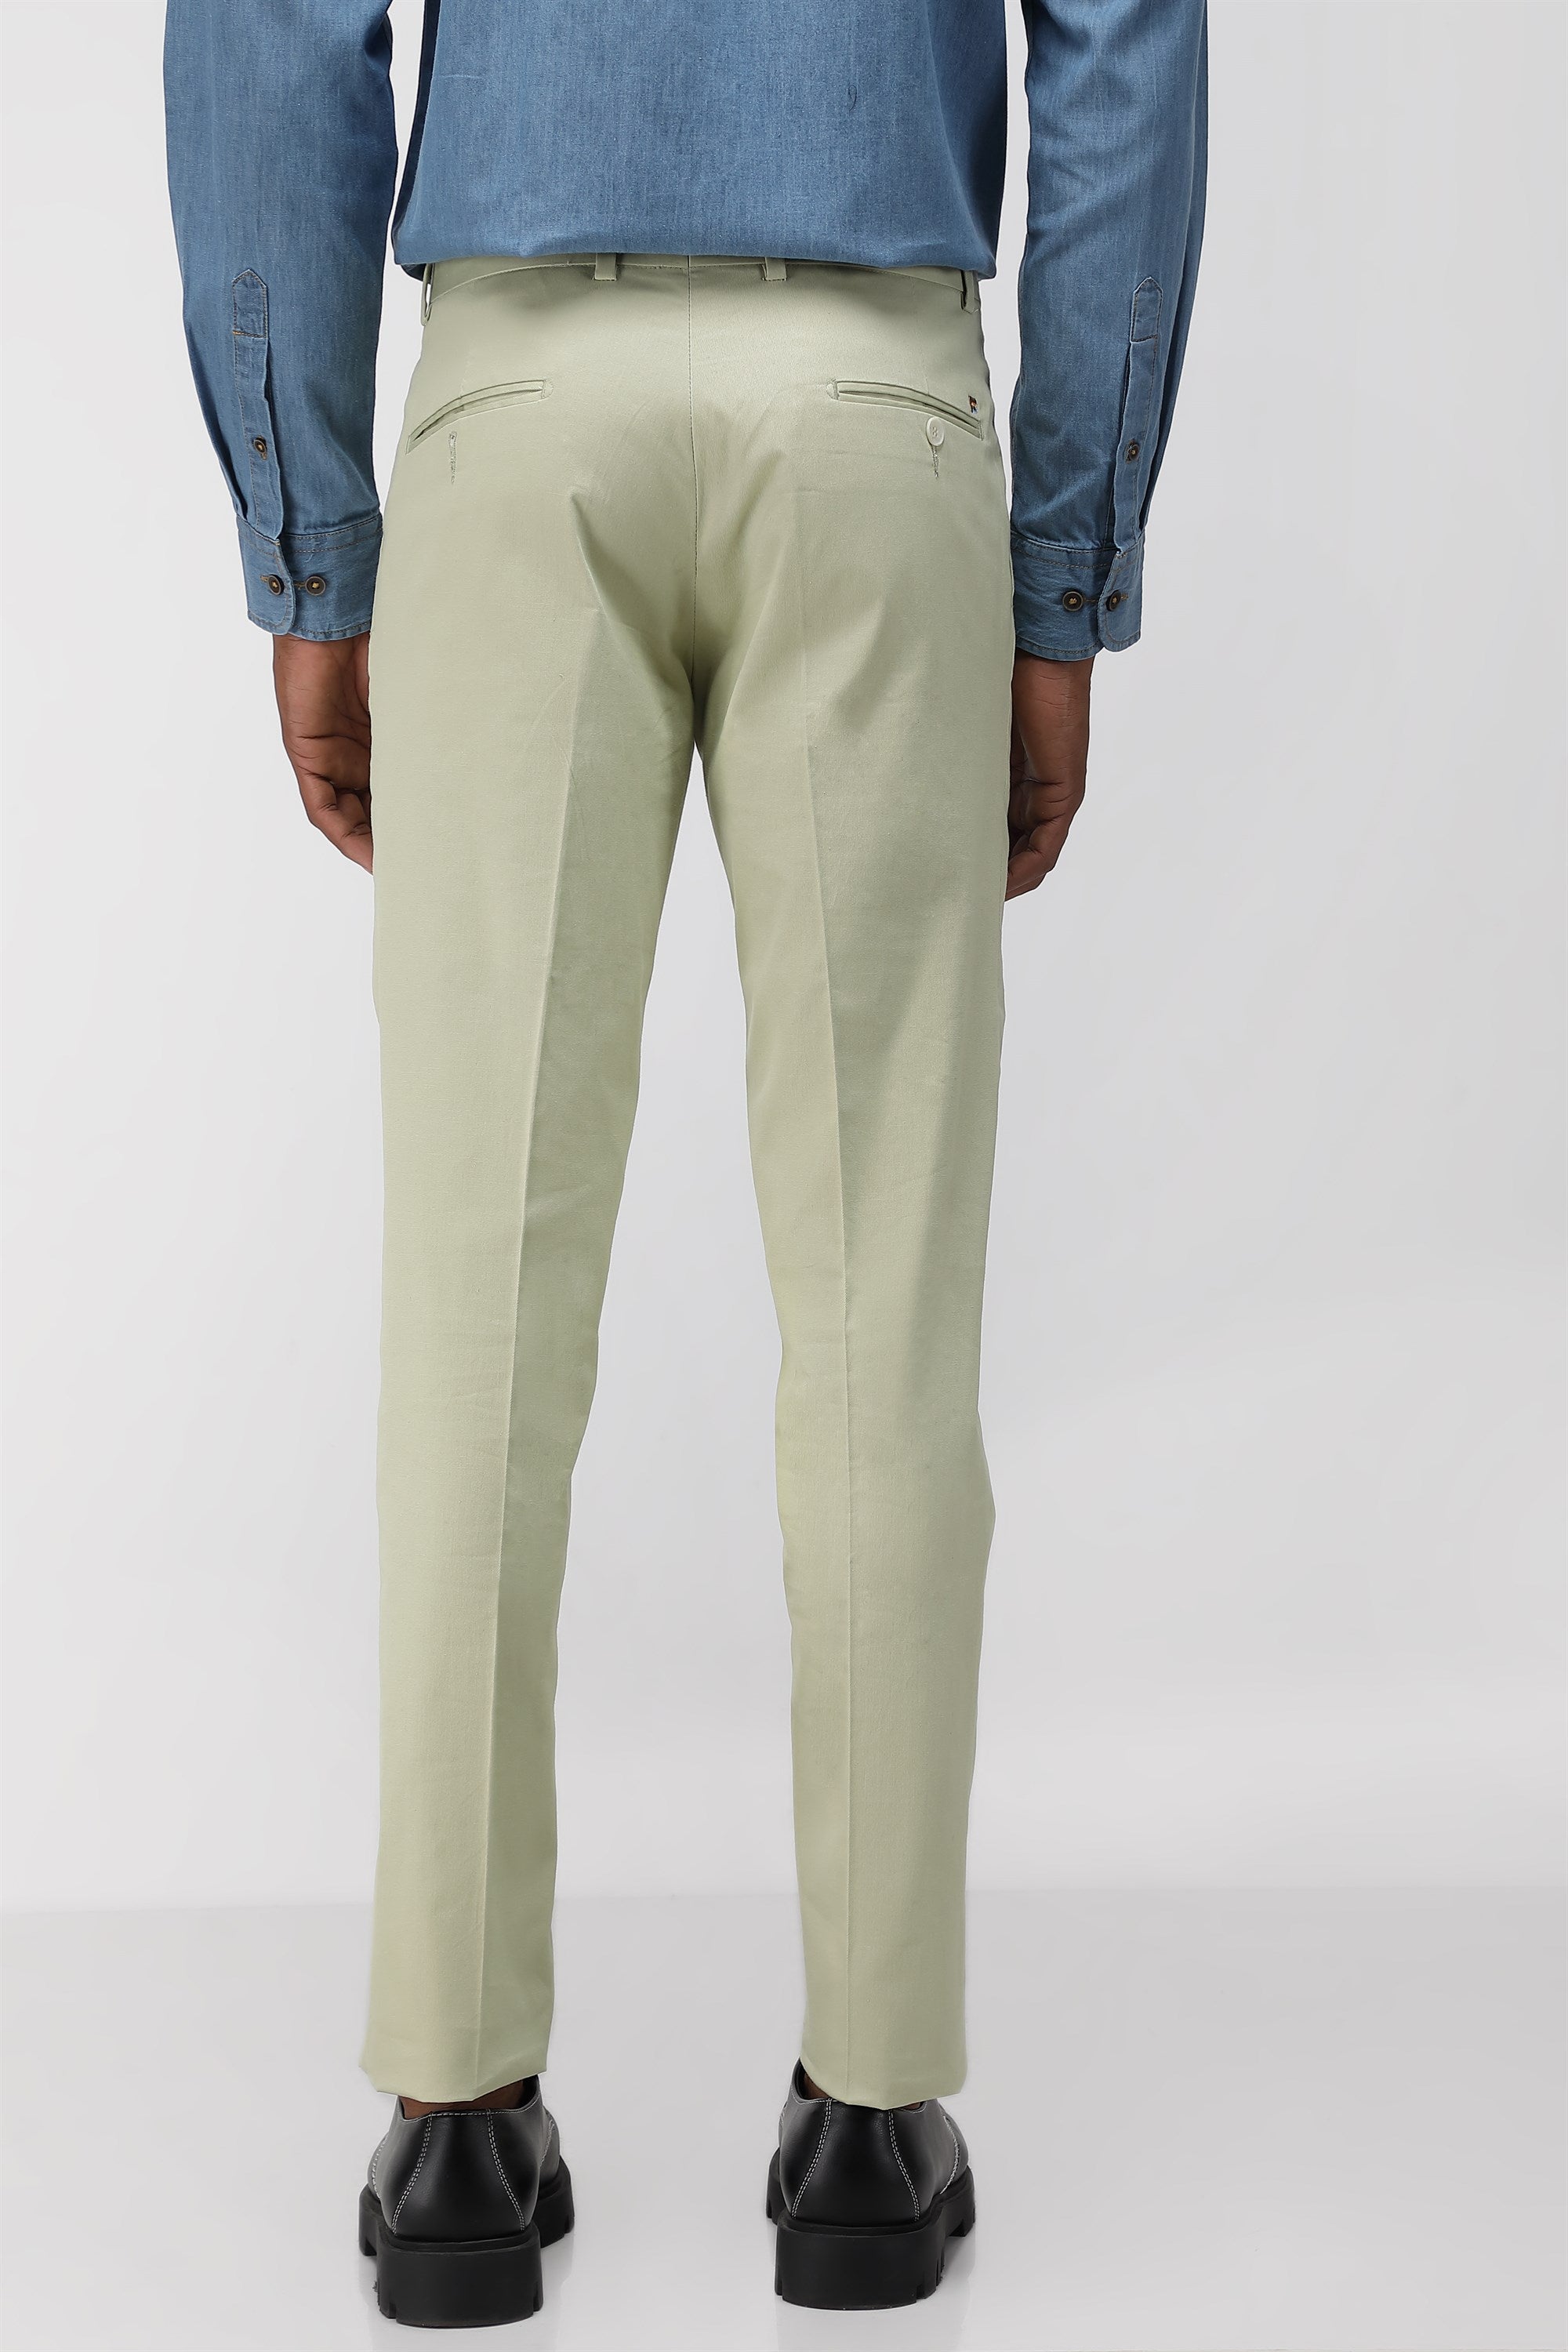 Formal Trouser: Explore Men Brown Cotton Formal Trouser on Cliths.com